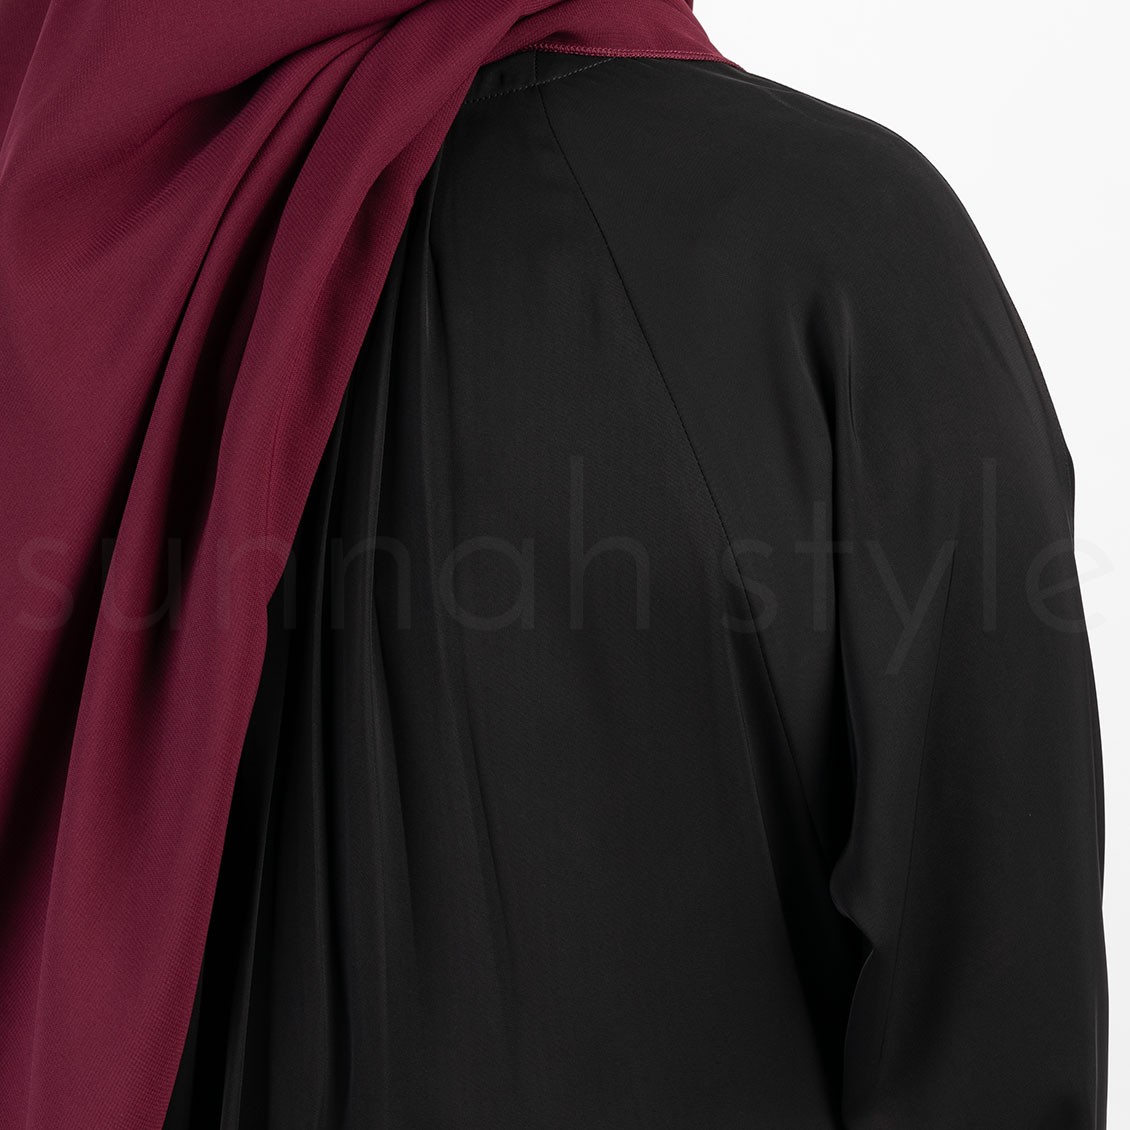 Sunnah Style Simplicity Umbrella Abaya Black